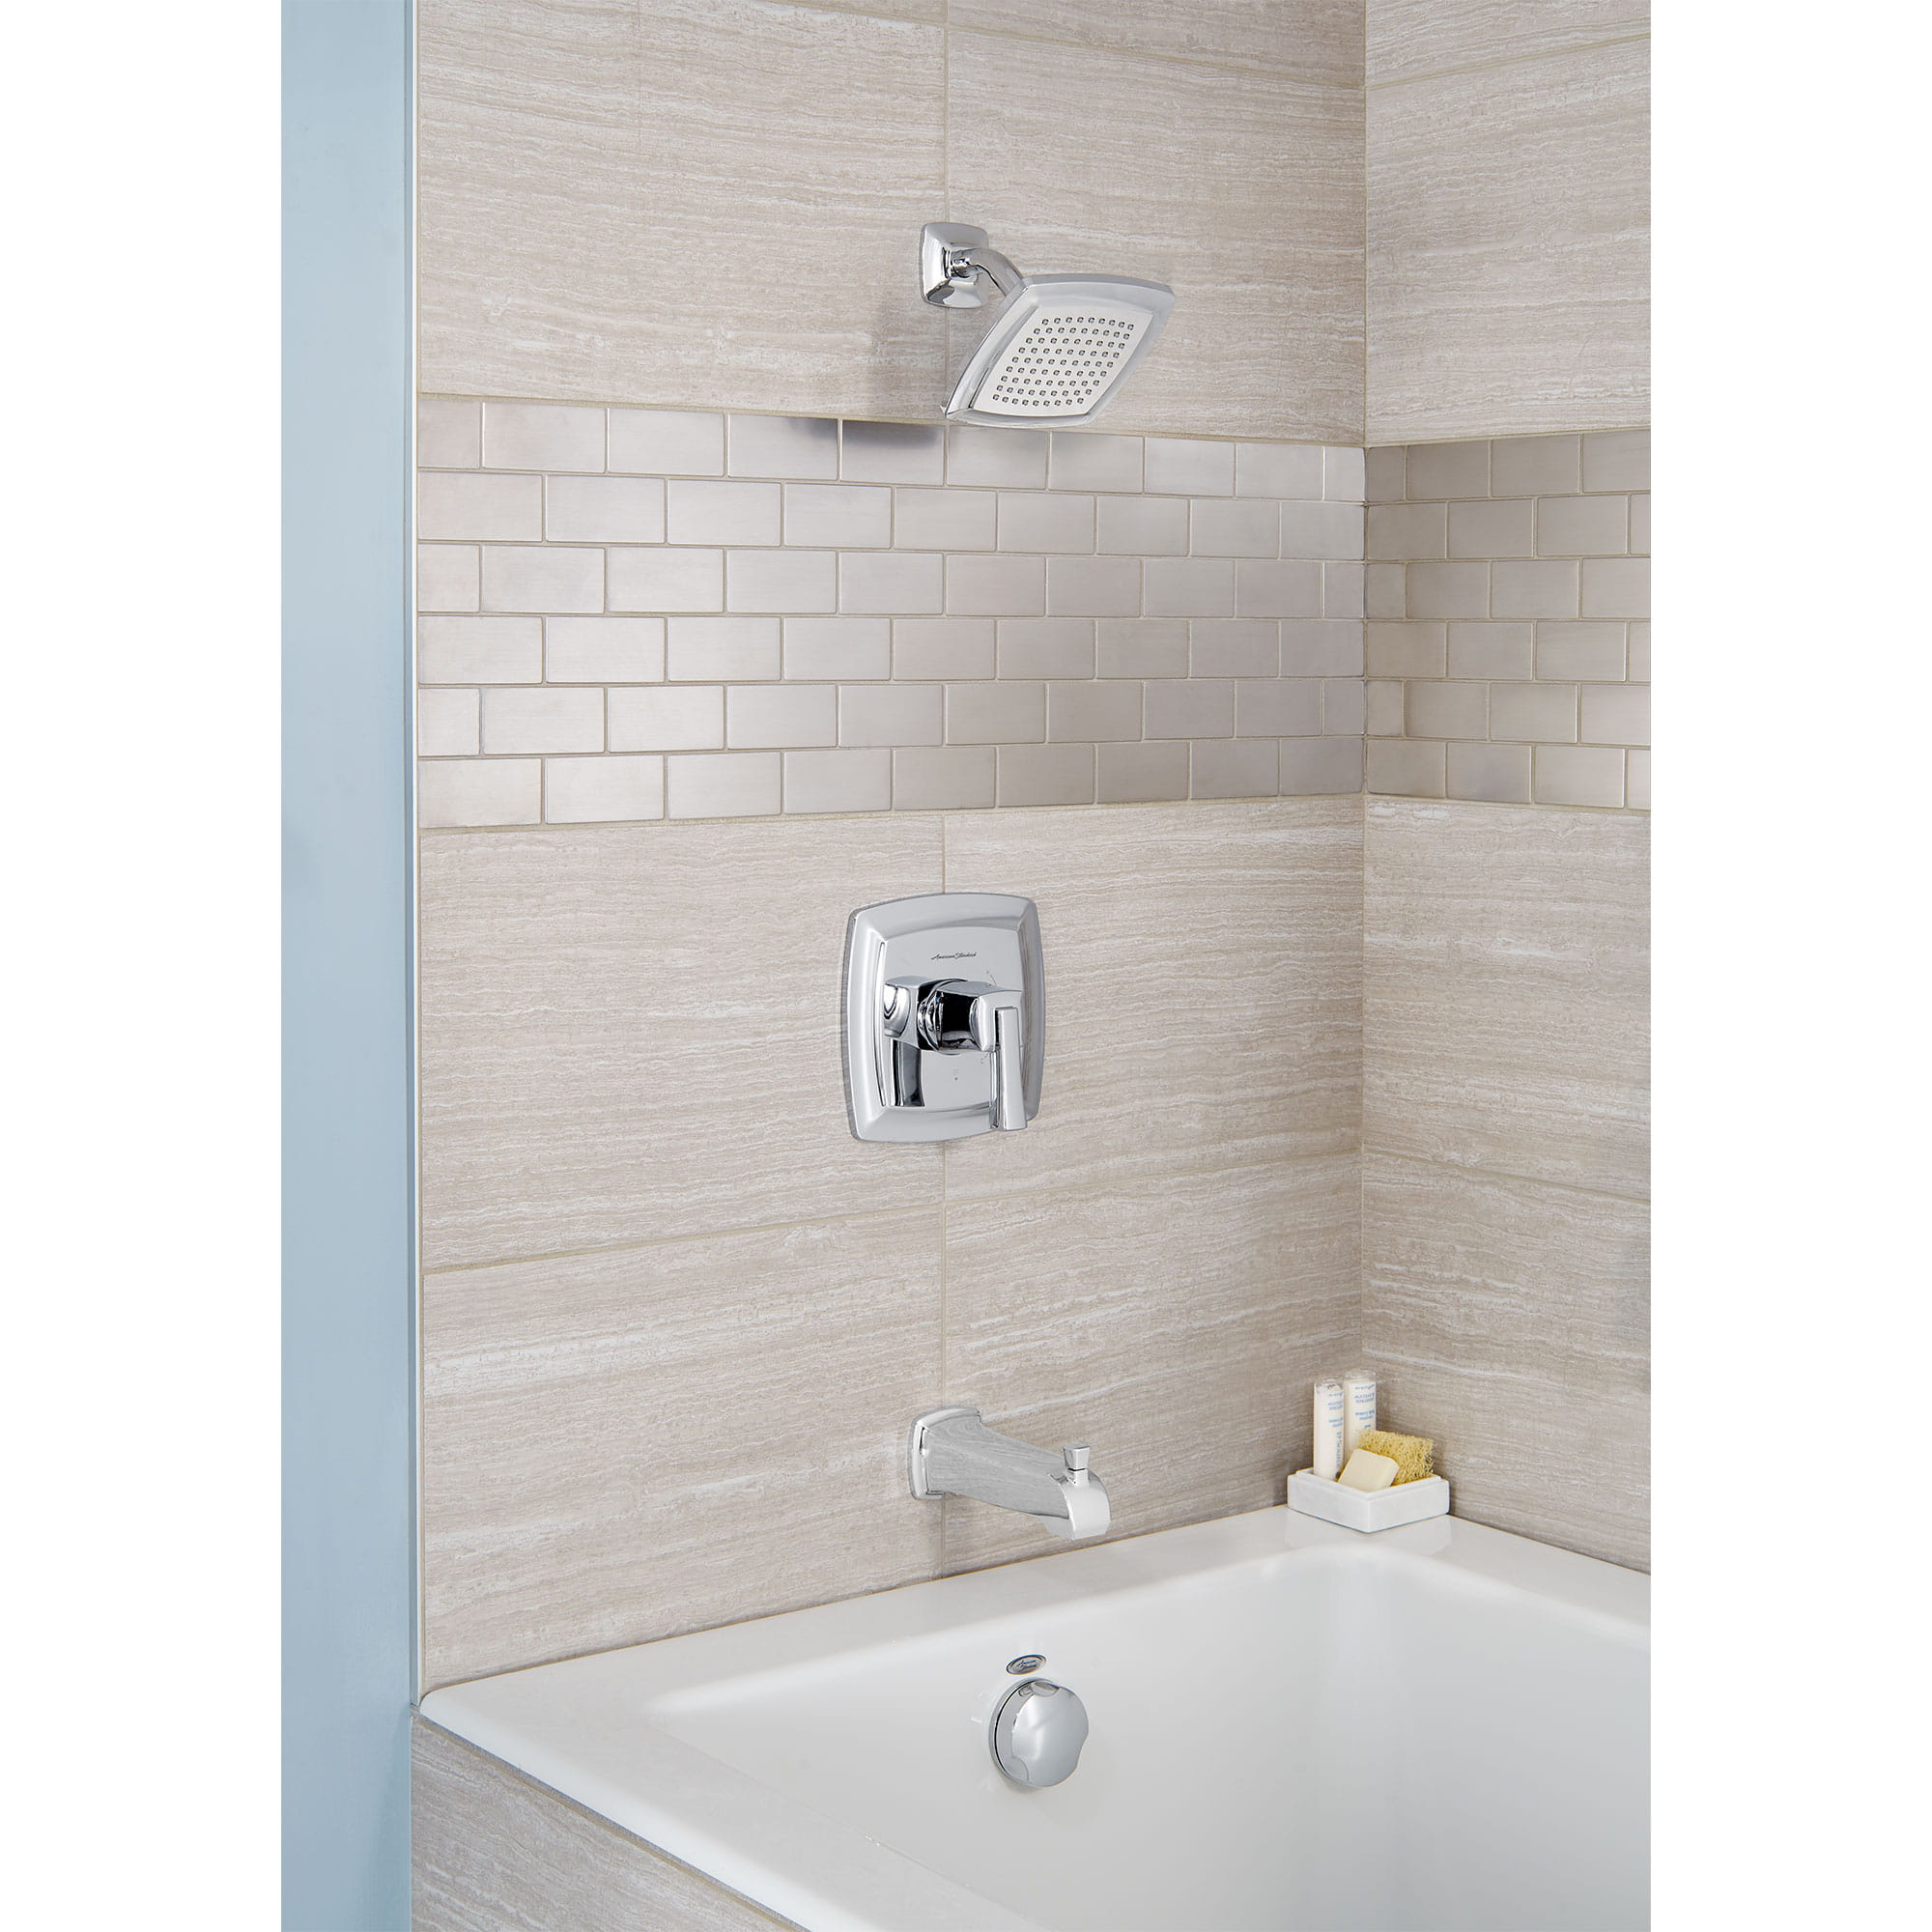 T555502.02 American Standard Chrome TownSquare Bath/ Shower Trim Kit Only NIB 